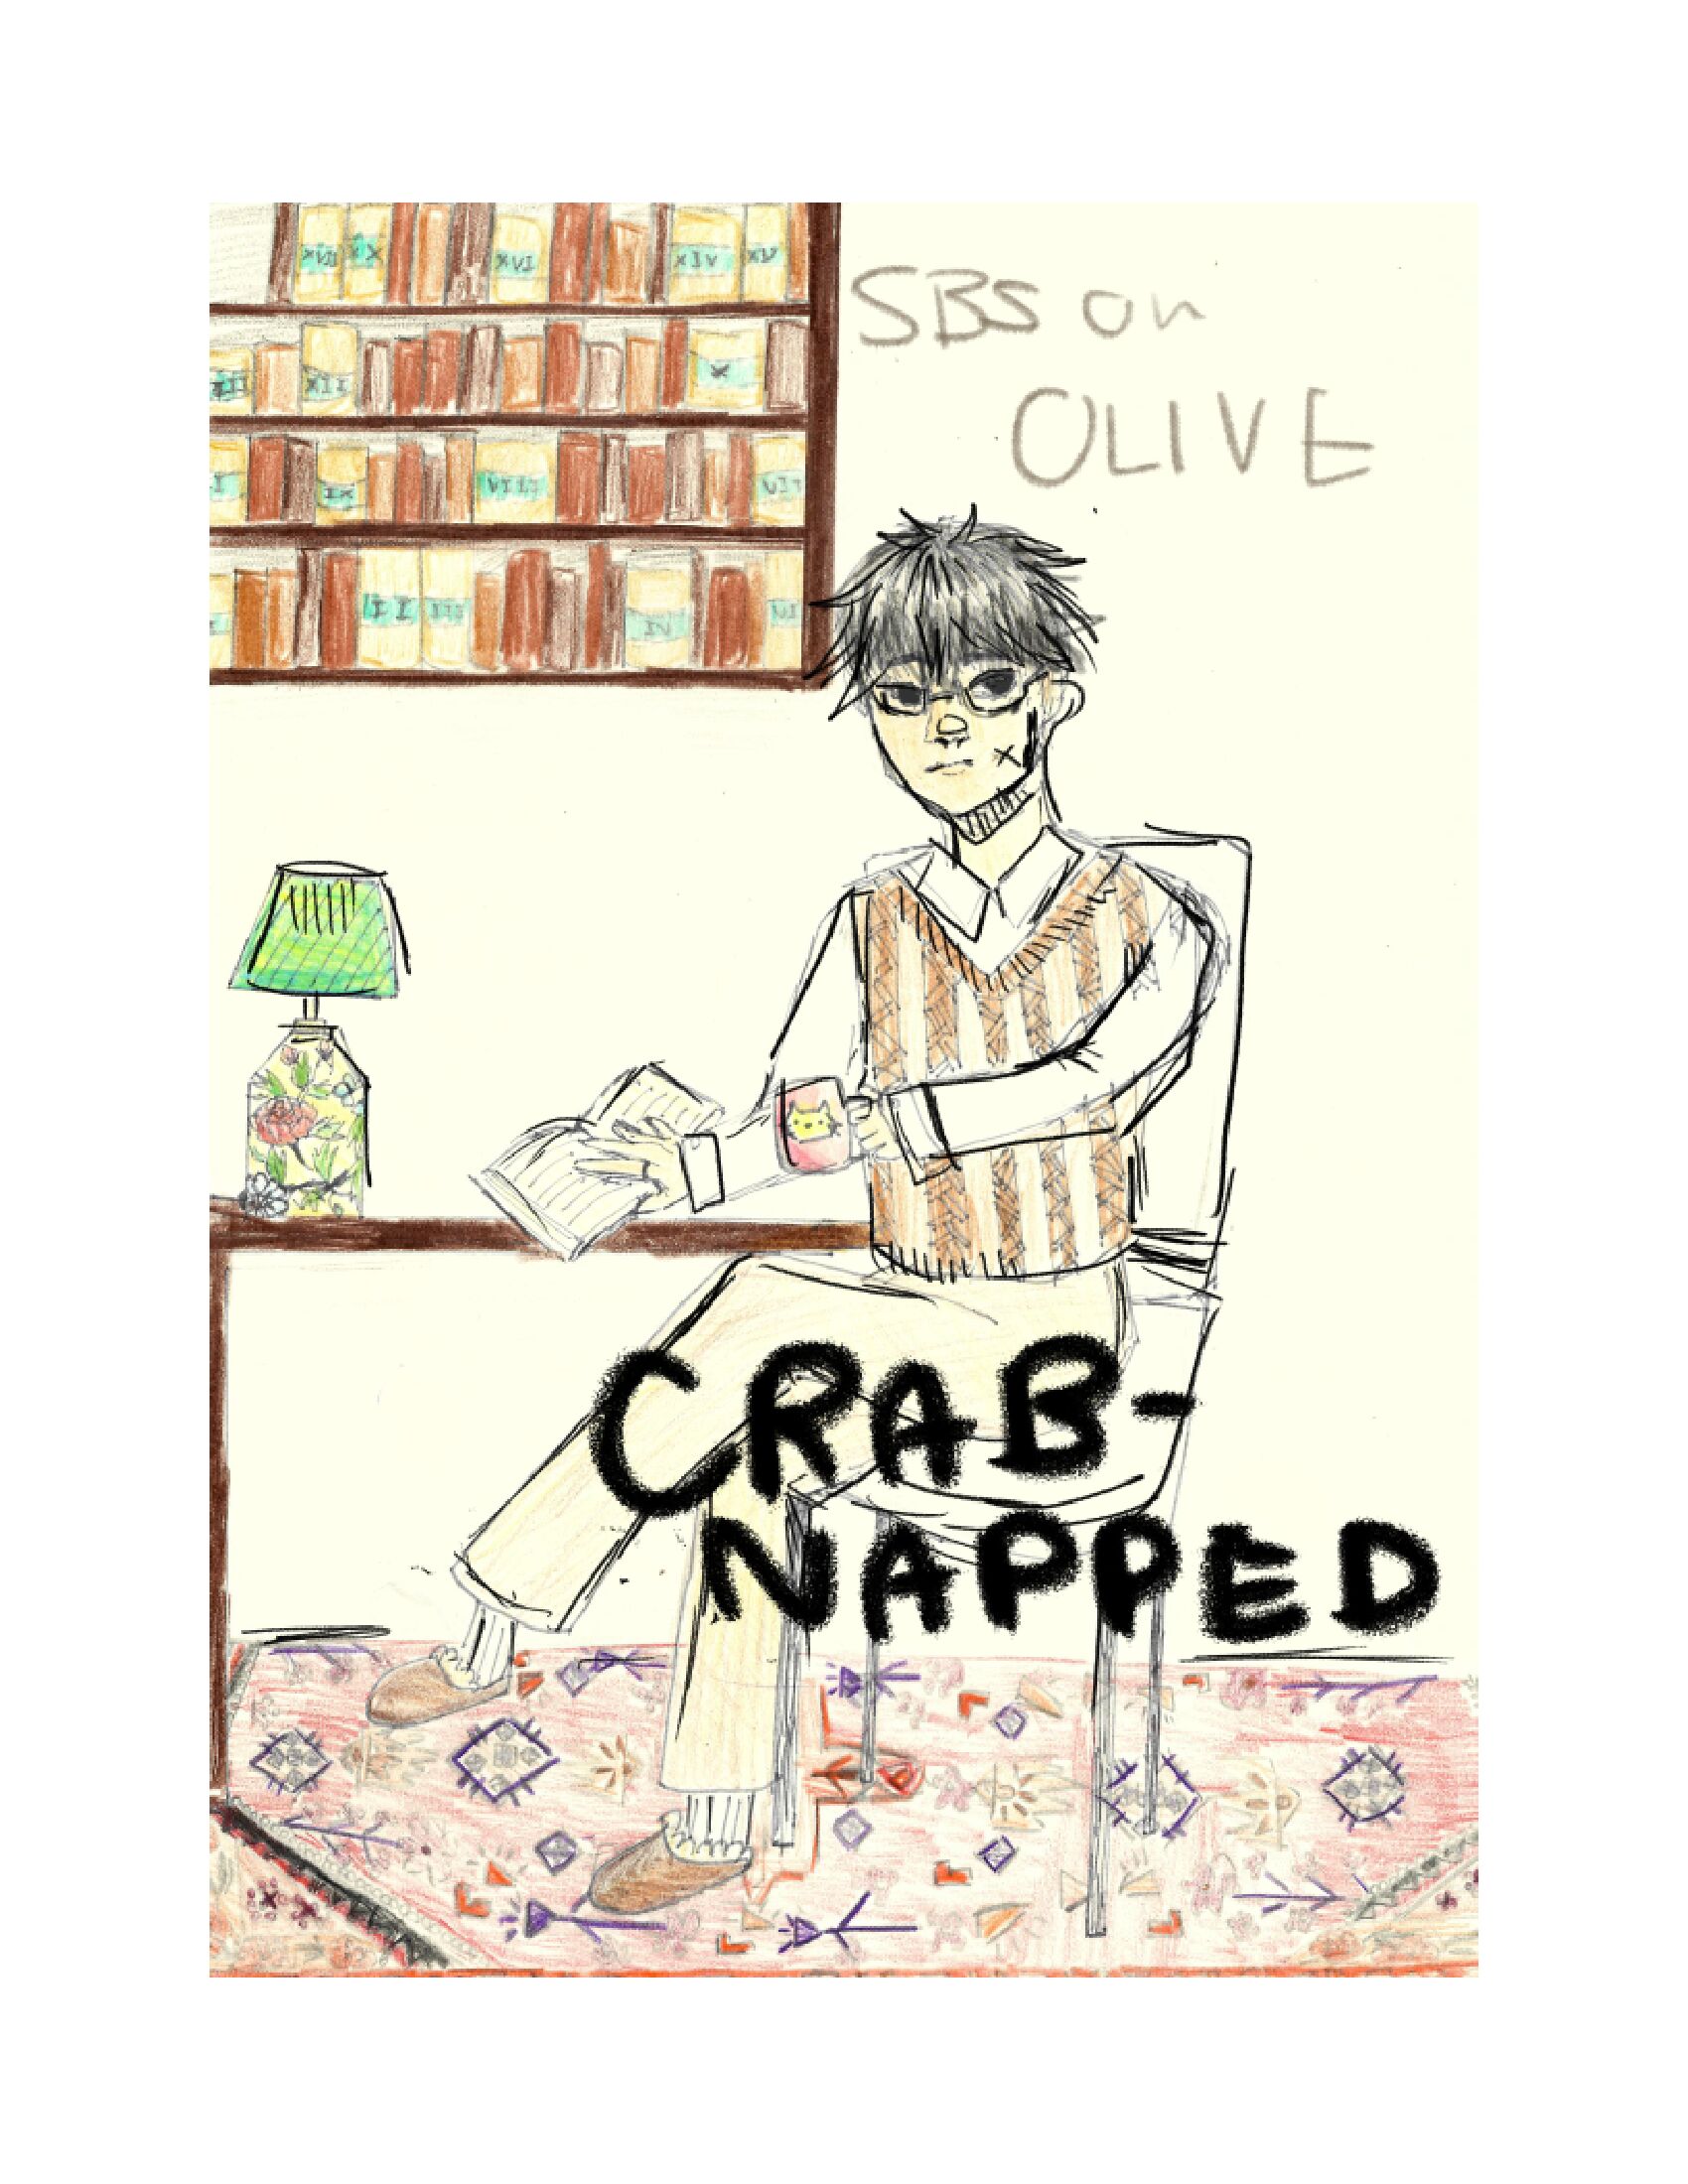 Crab-napped